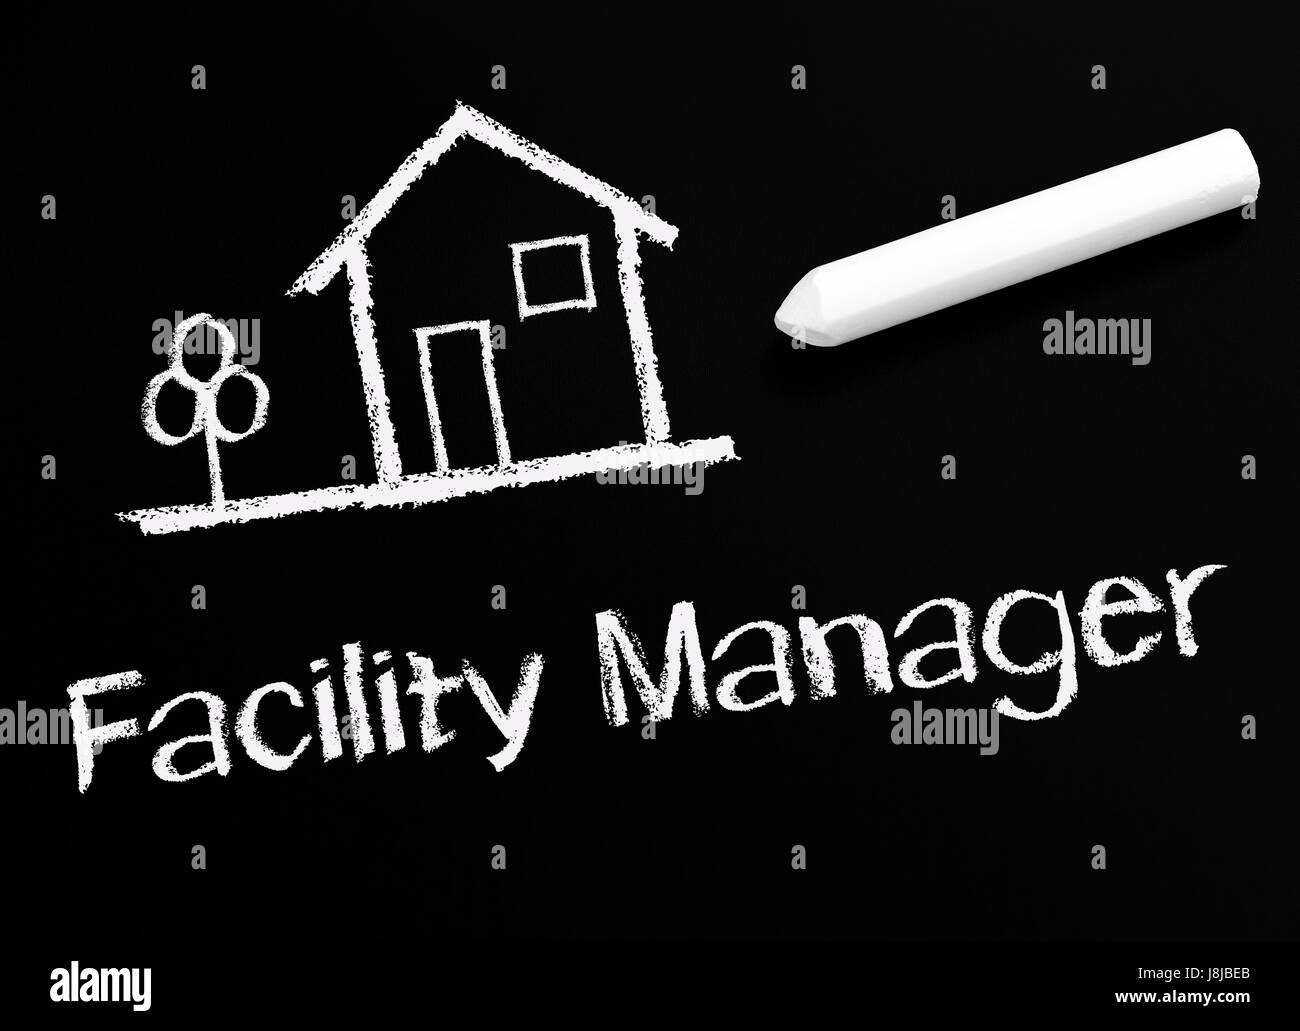 facility manager Stock Photo